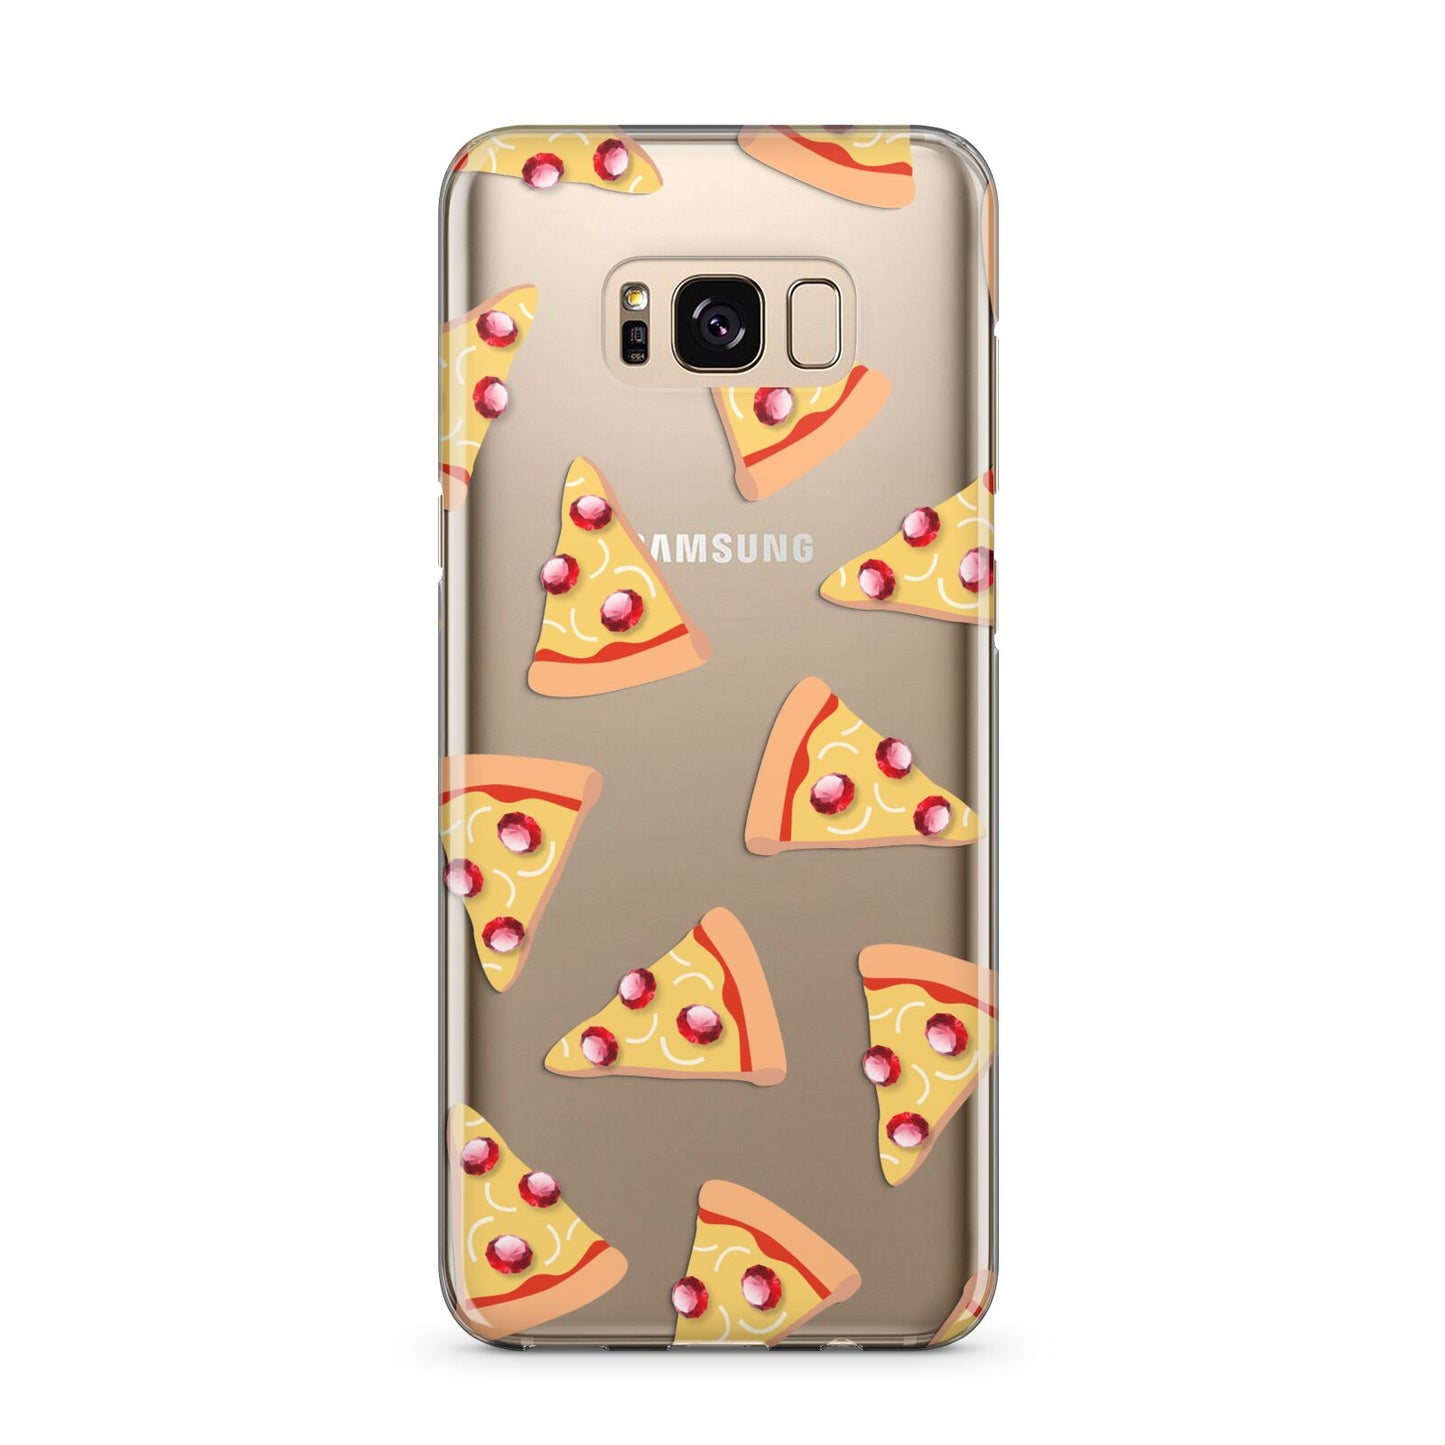 Rubies on Cartoon Pizza Slices Samsung Galaxy S8 Plus Case